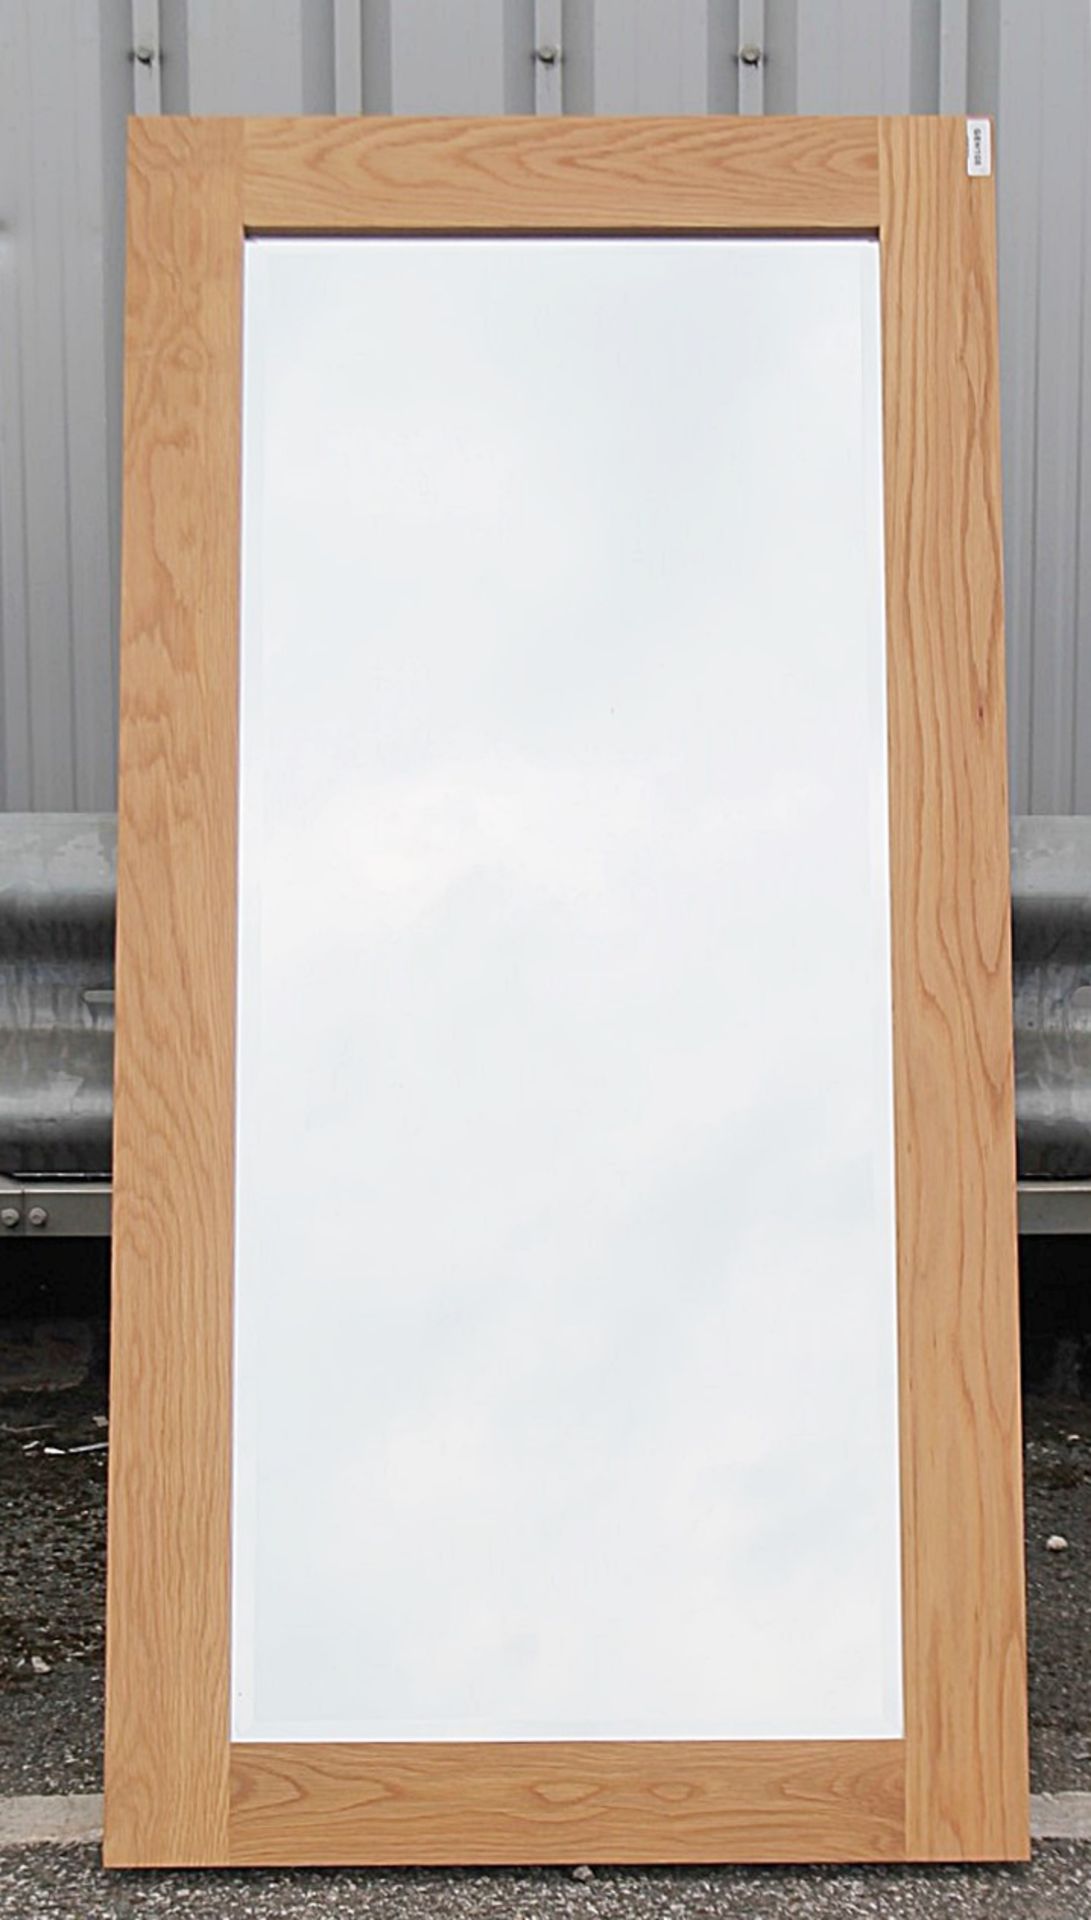 1 x Stonearch Solid Oak Framed Mirror - Dimensions: 150 x 75cm - Ref: GEN108/G-IT - CL713 - - Image 2 of 4